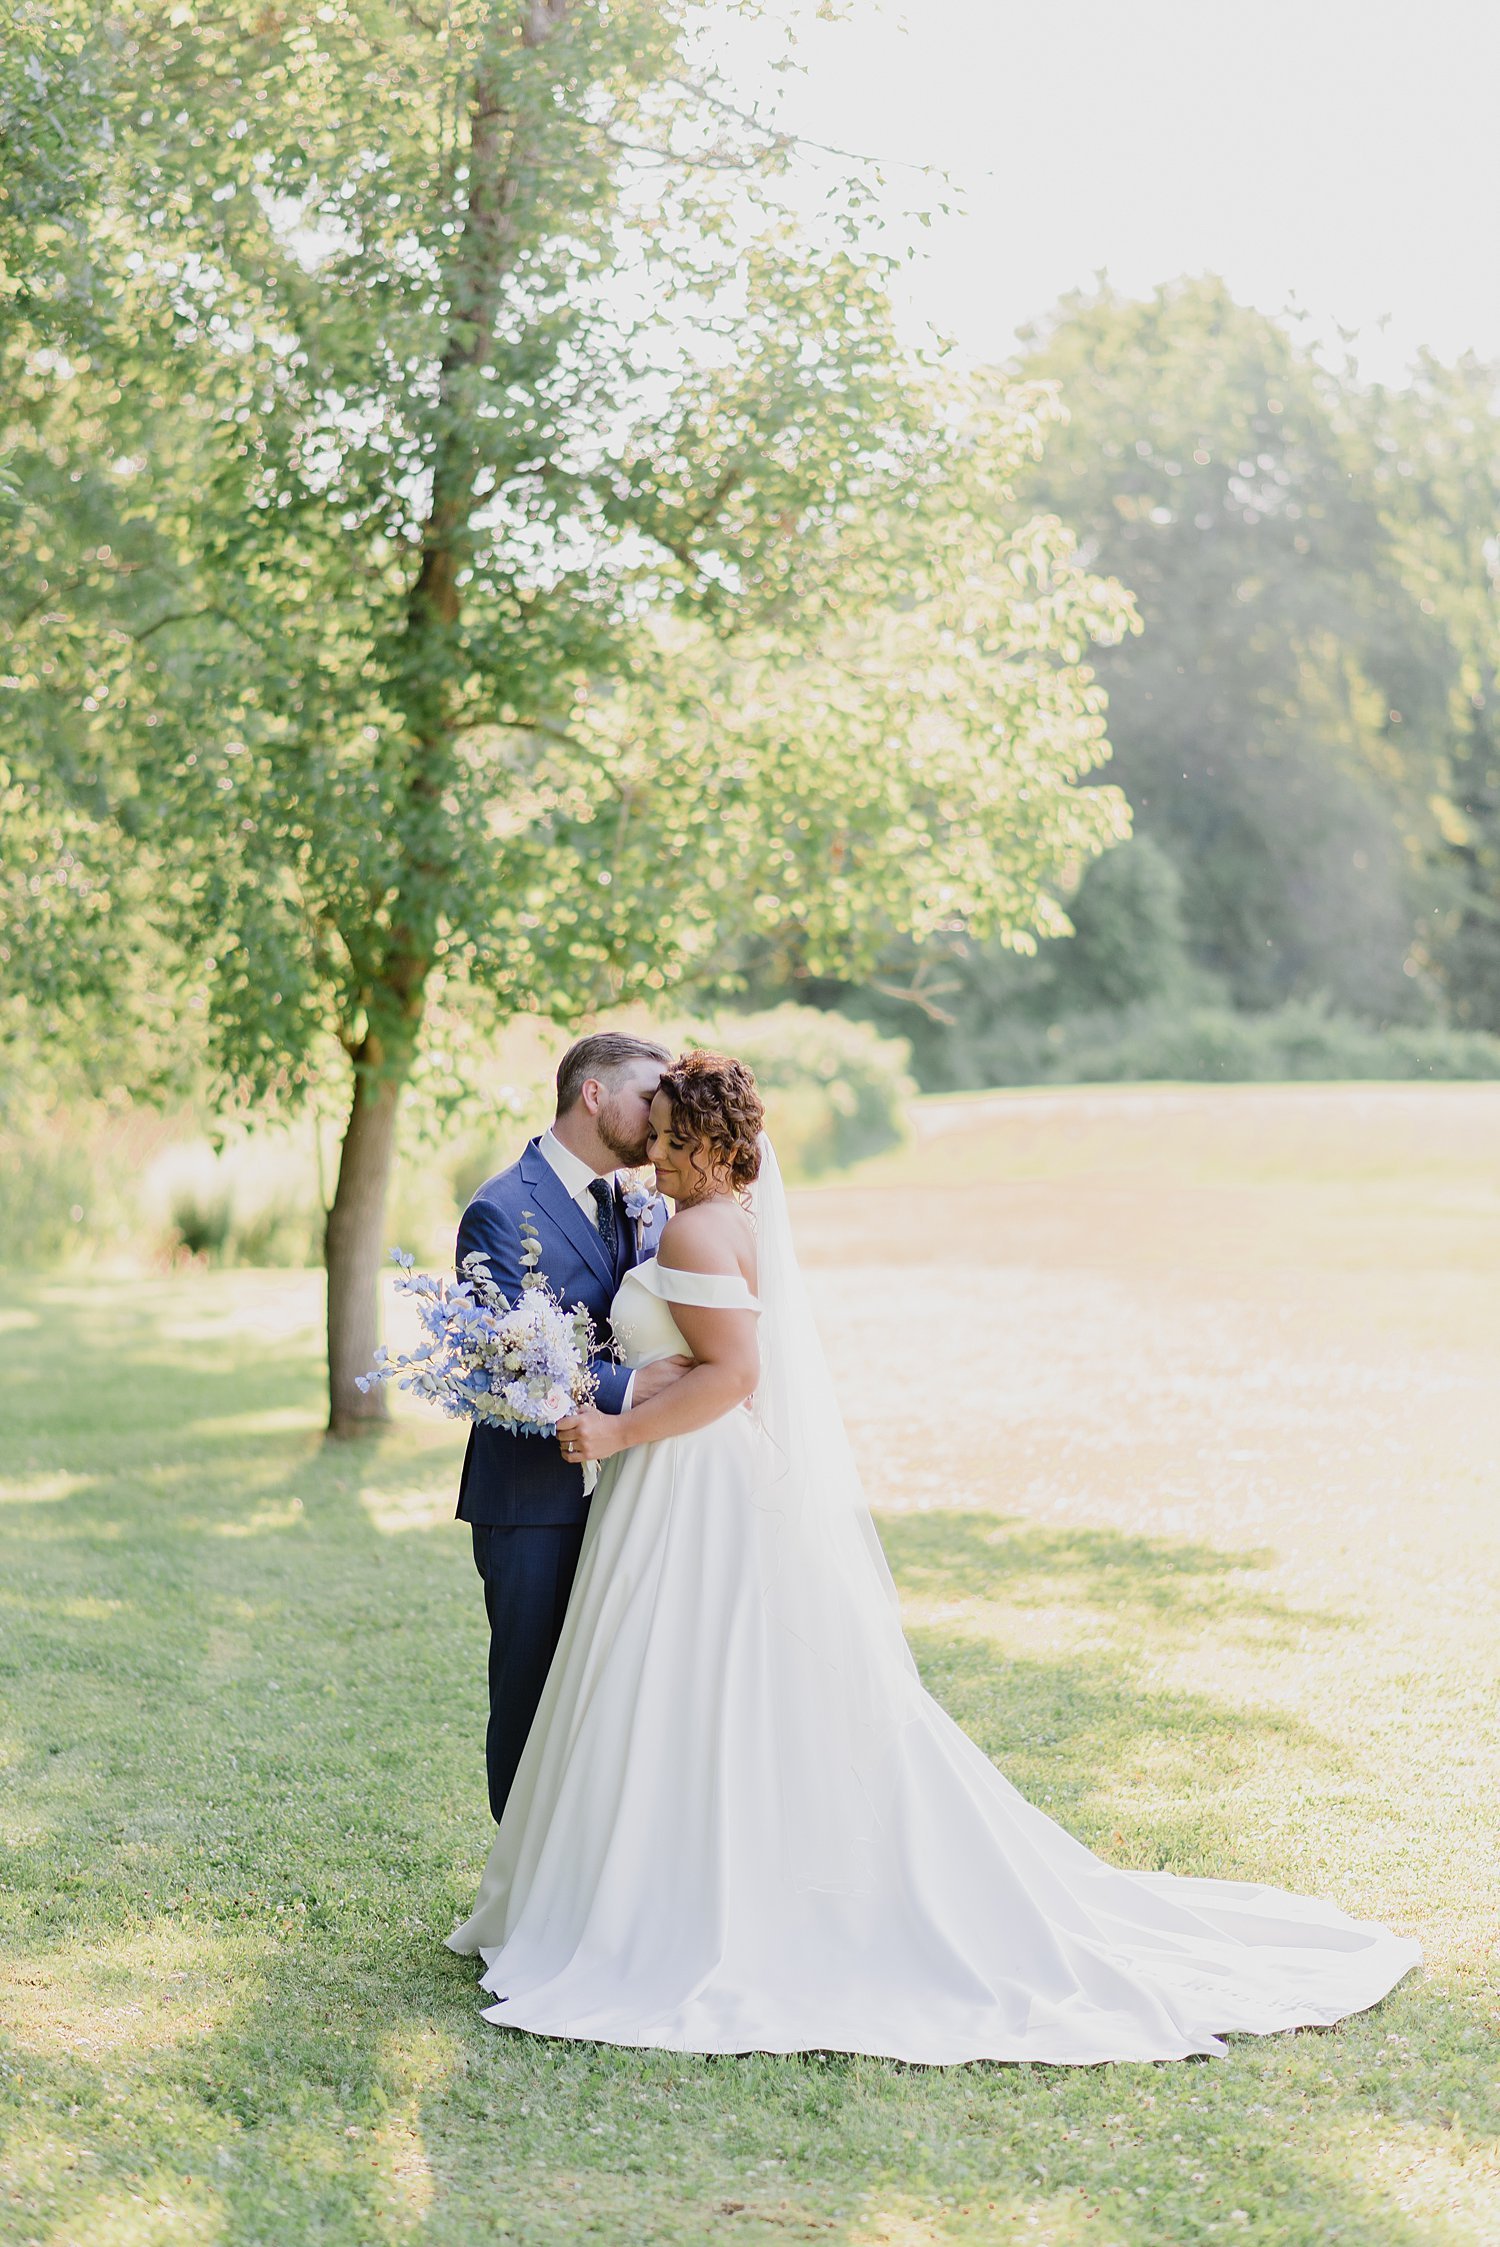 Elegant Summer Backyard Tented Wedding in Sydenham, Ontario | Prince Edward County Wedding Photographer | Holly McMurter Photographs_0053.jpg